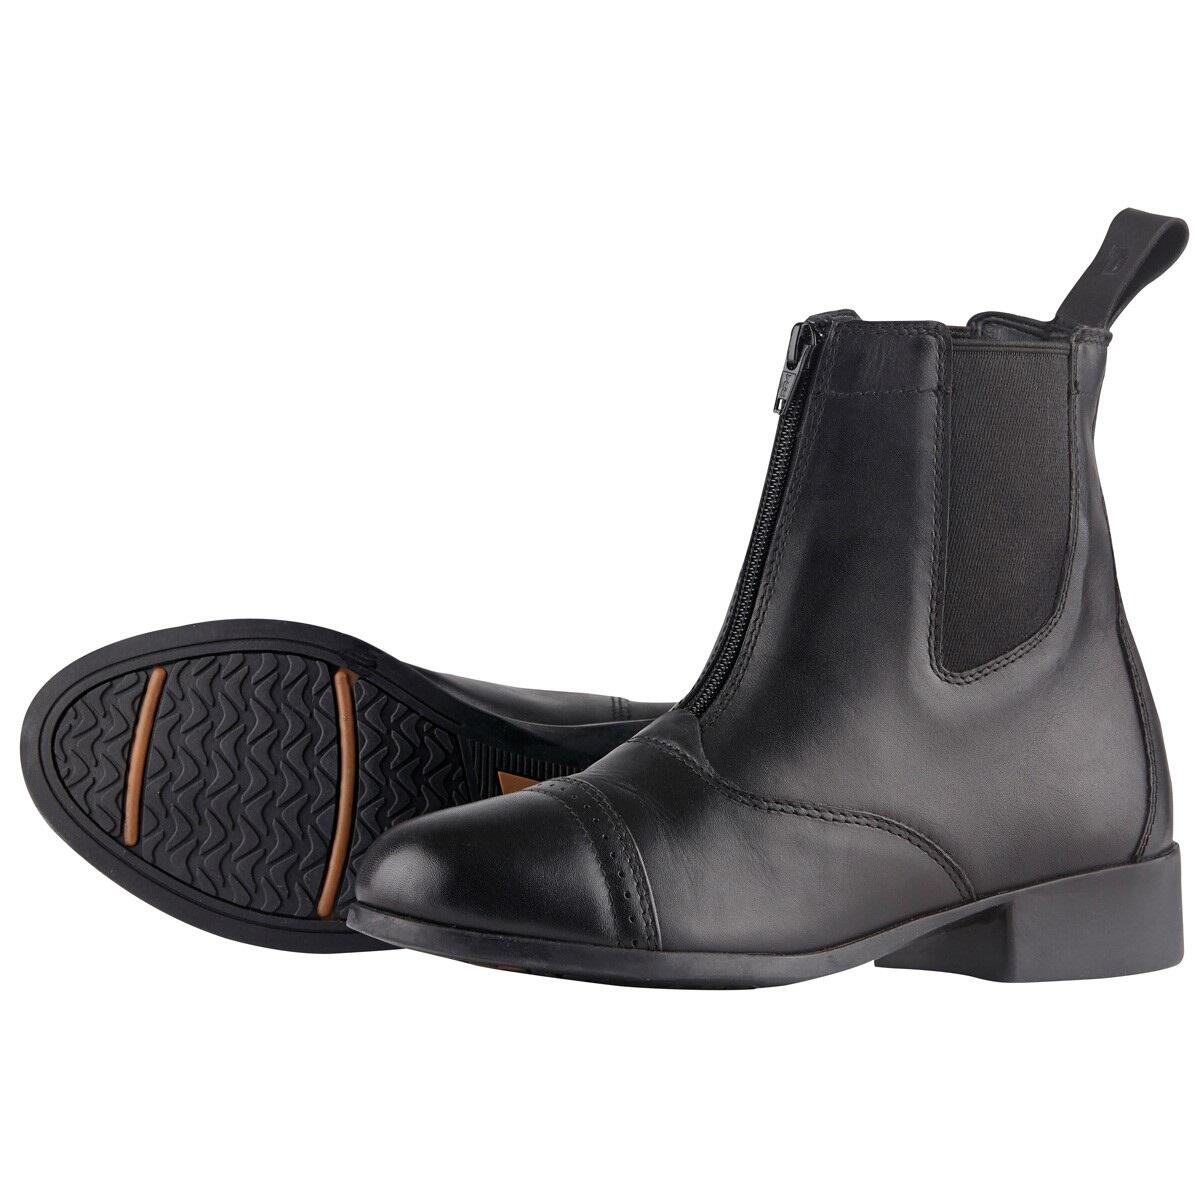 Adults Elevation Zip Leather Paddock Boots II (Black) 2/5